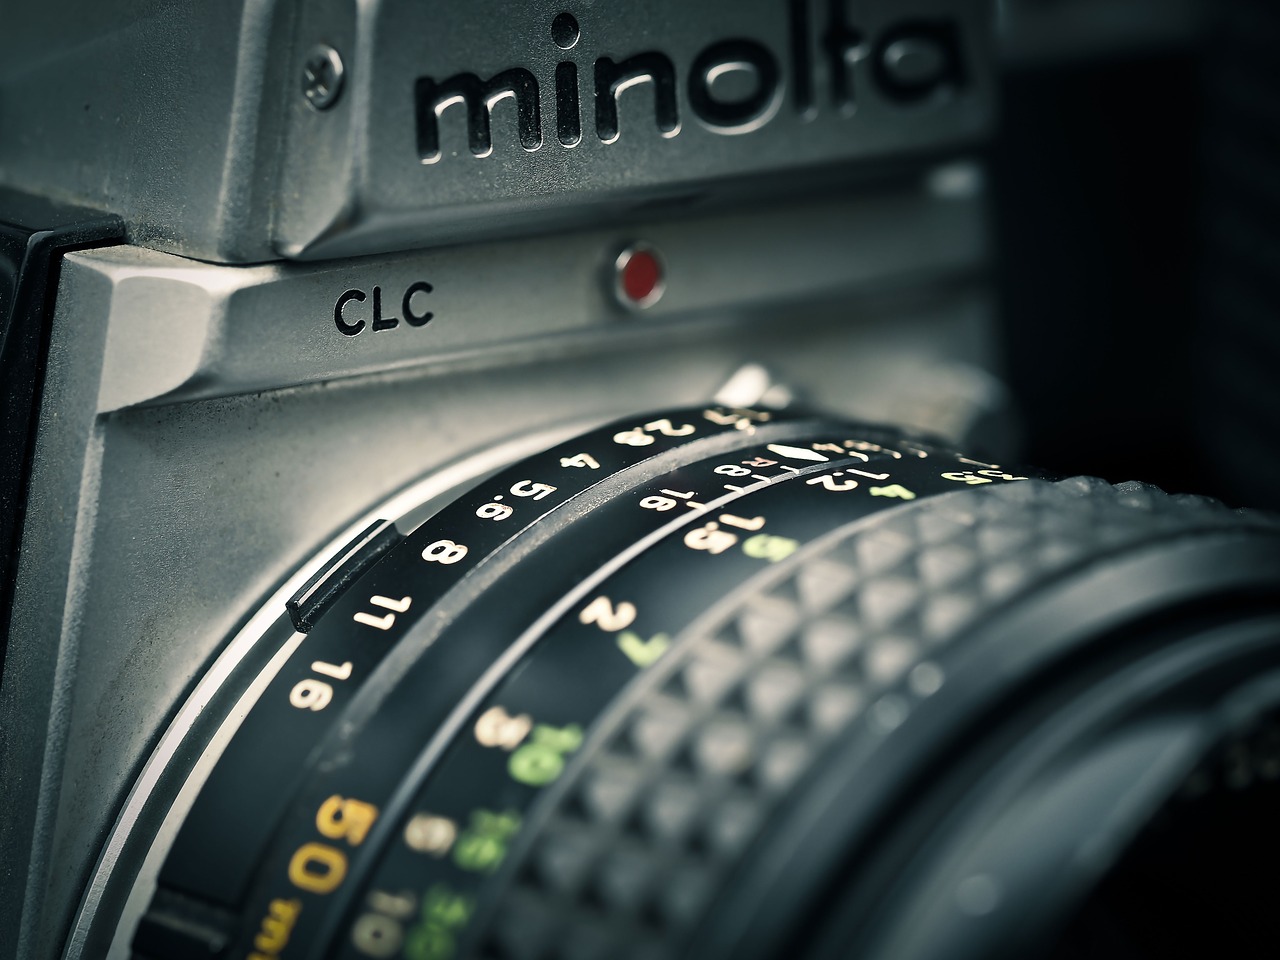 Fotoaparatas, Fotoaparatas, Minolta, Nuotrauka, Senas, Nostalgija, Vintage, Retro, Fotografija, Retro Išvaizda